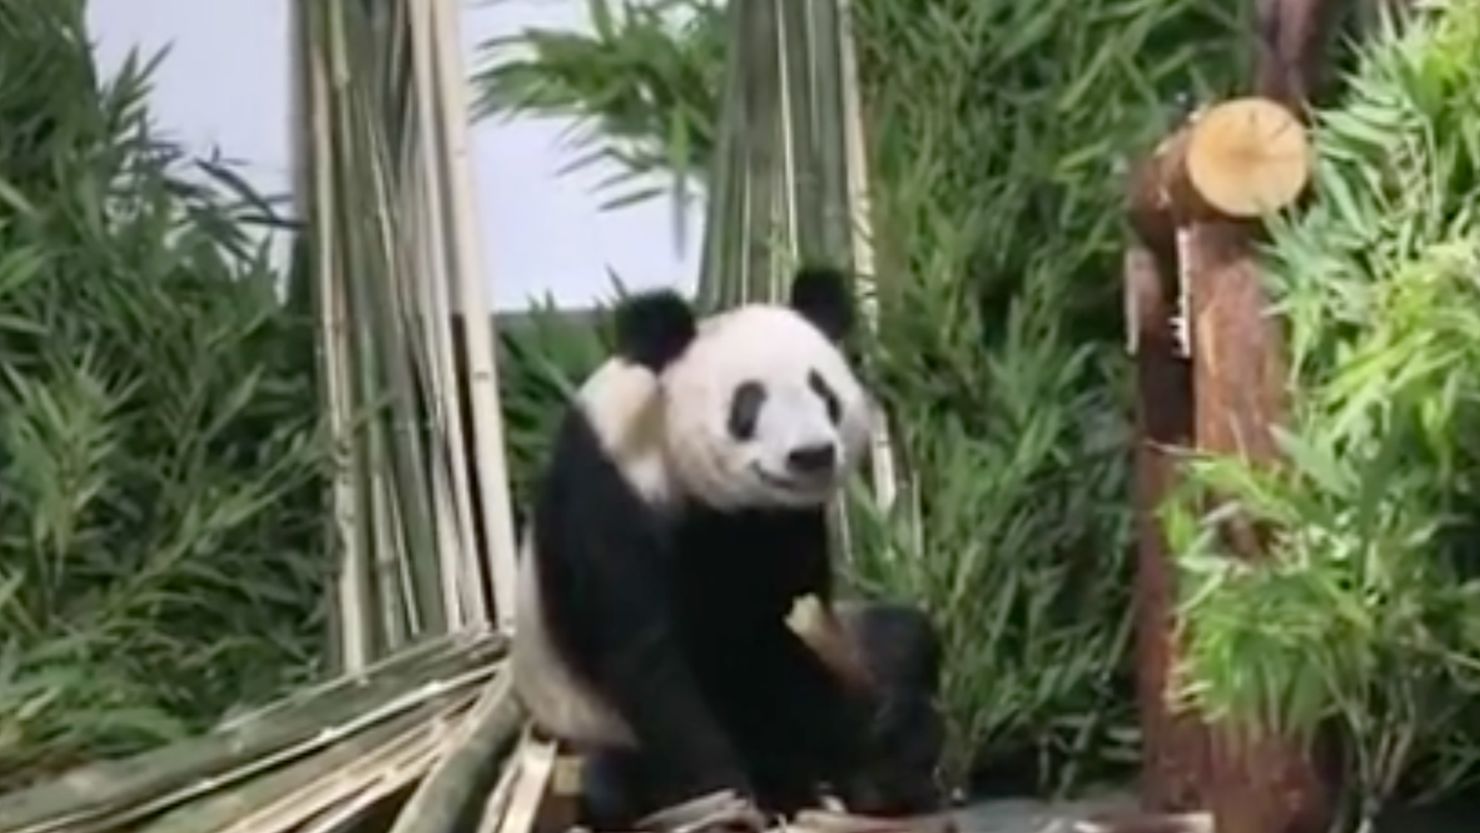 Giant panda Ya Ya has returned to the Beijing Zoo.